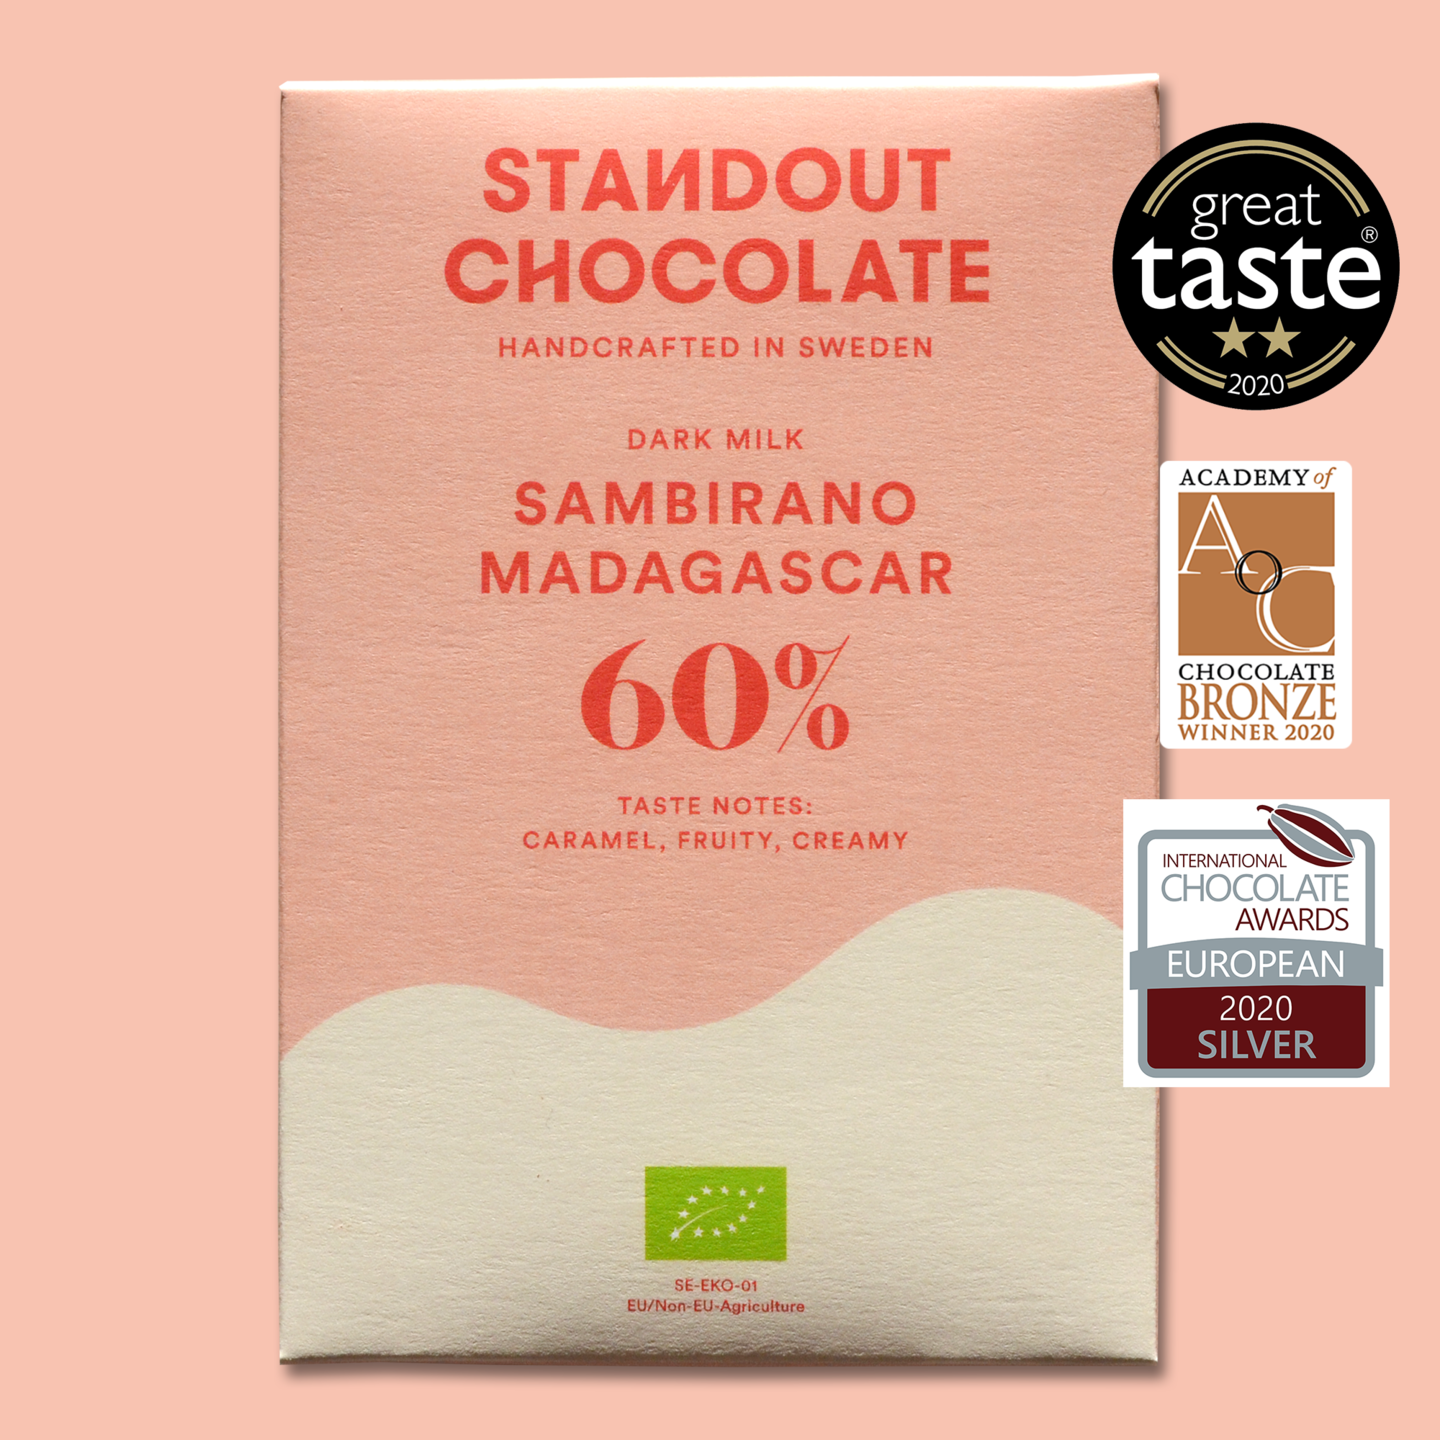 STANDOUT CHOCOLATE Milchschokolade | Dark Milk »Madagascar Sambirano« 60% 